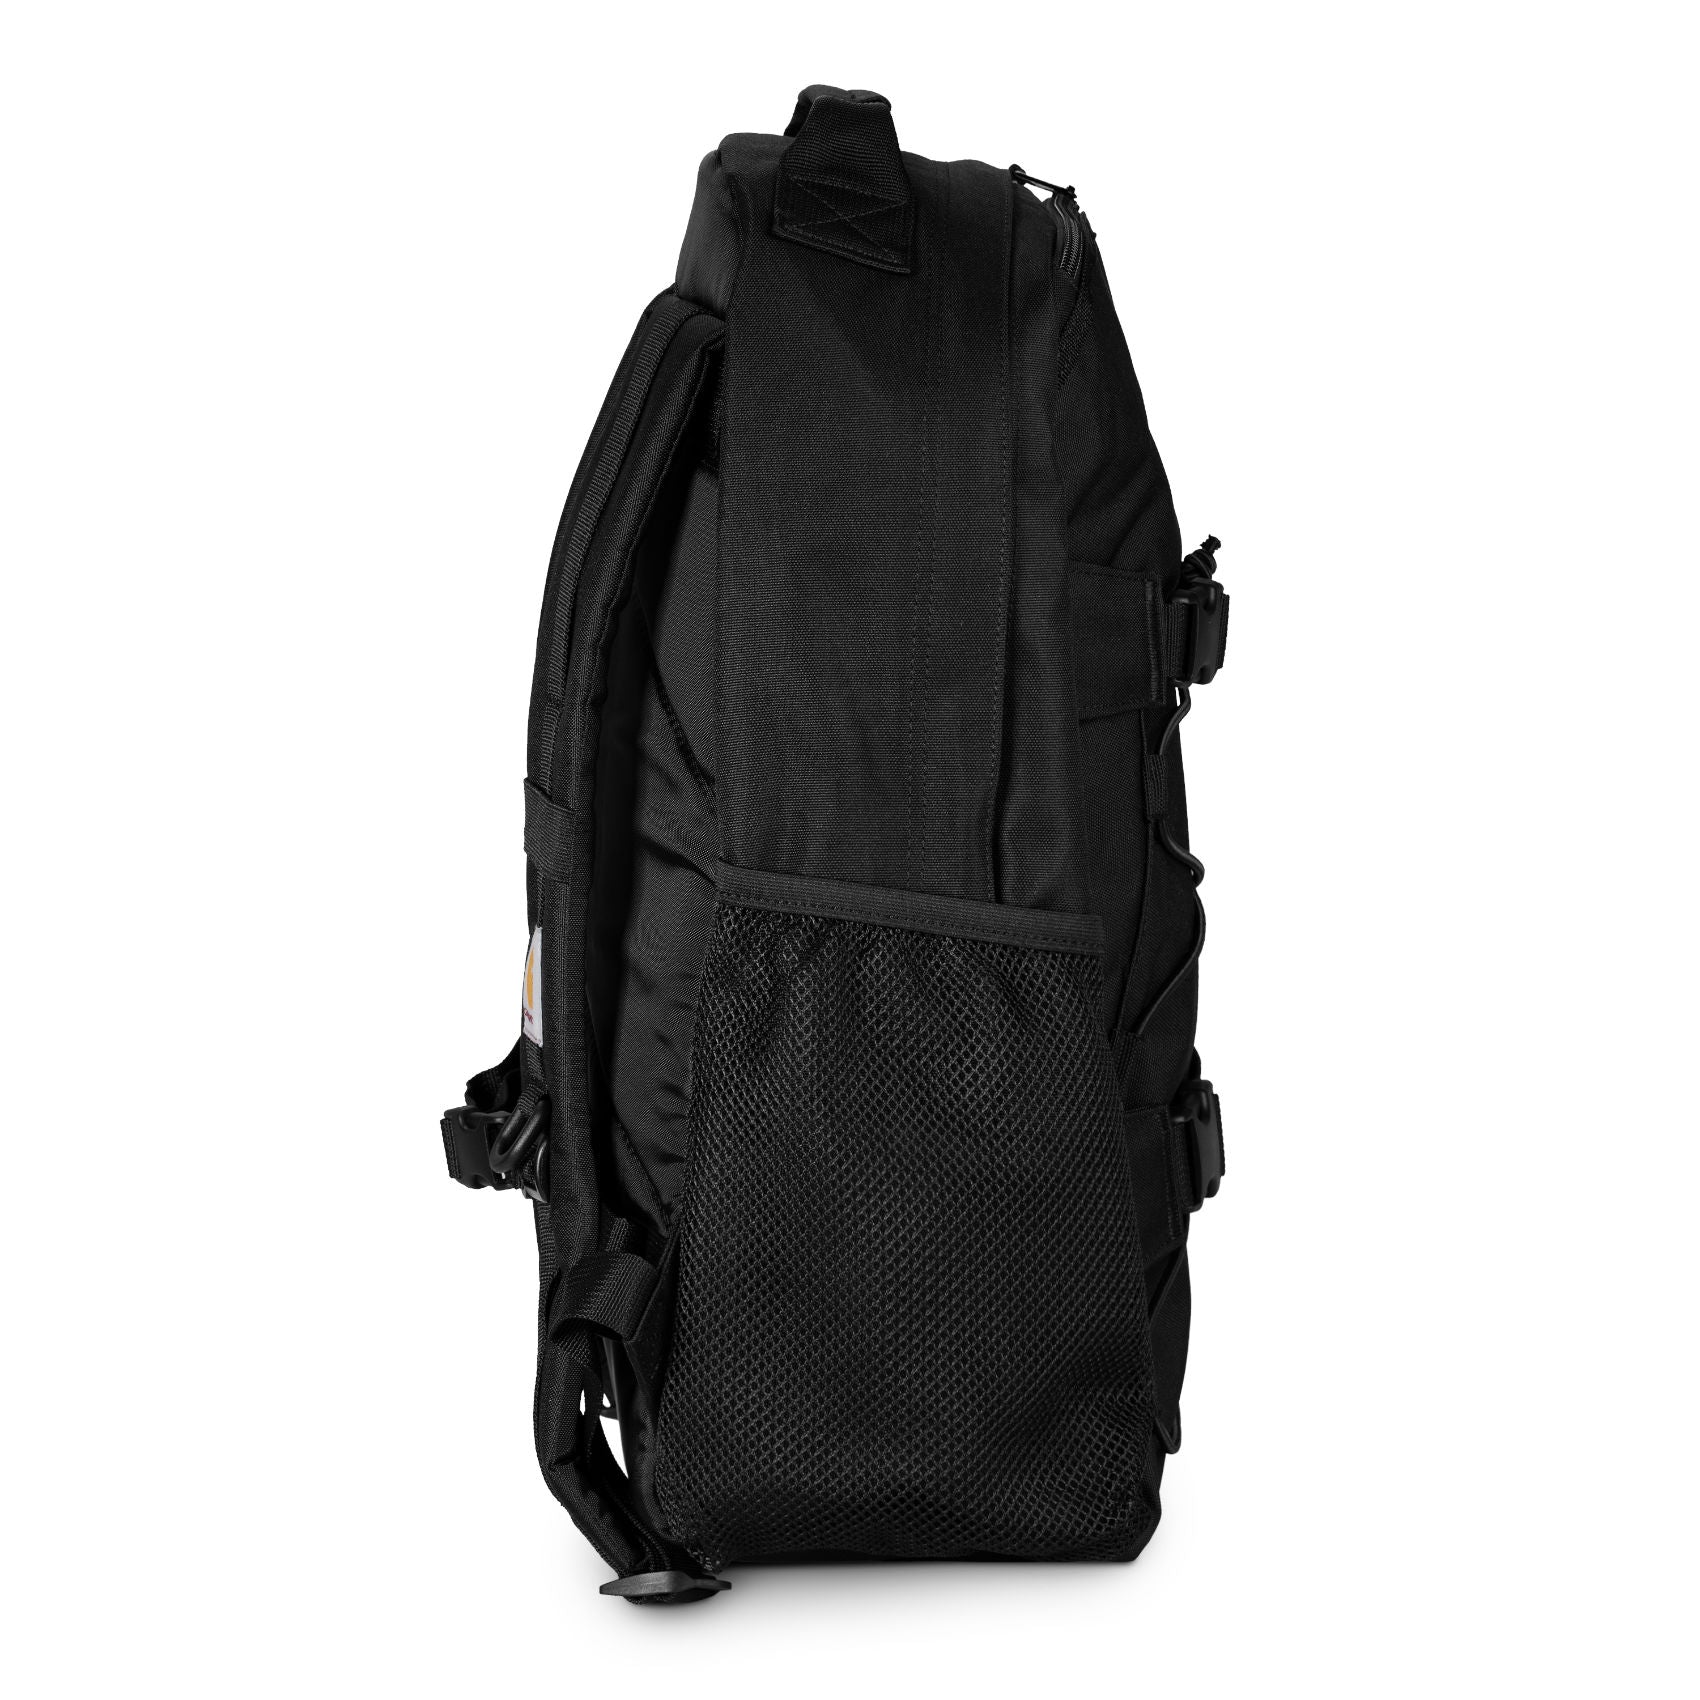 Carhartt WIP Kickflip Backpack Black. Foto do lado direito.